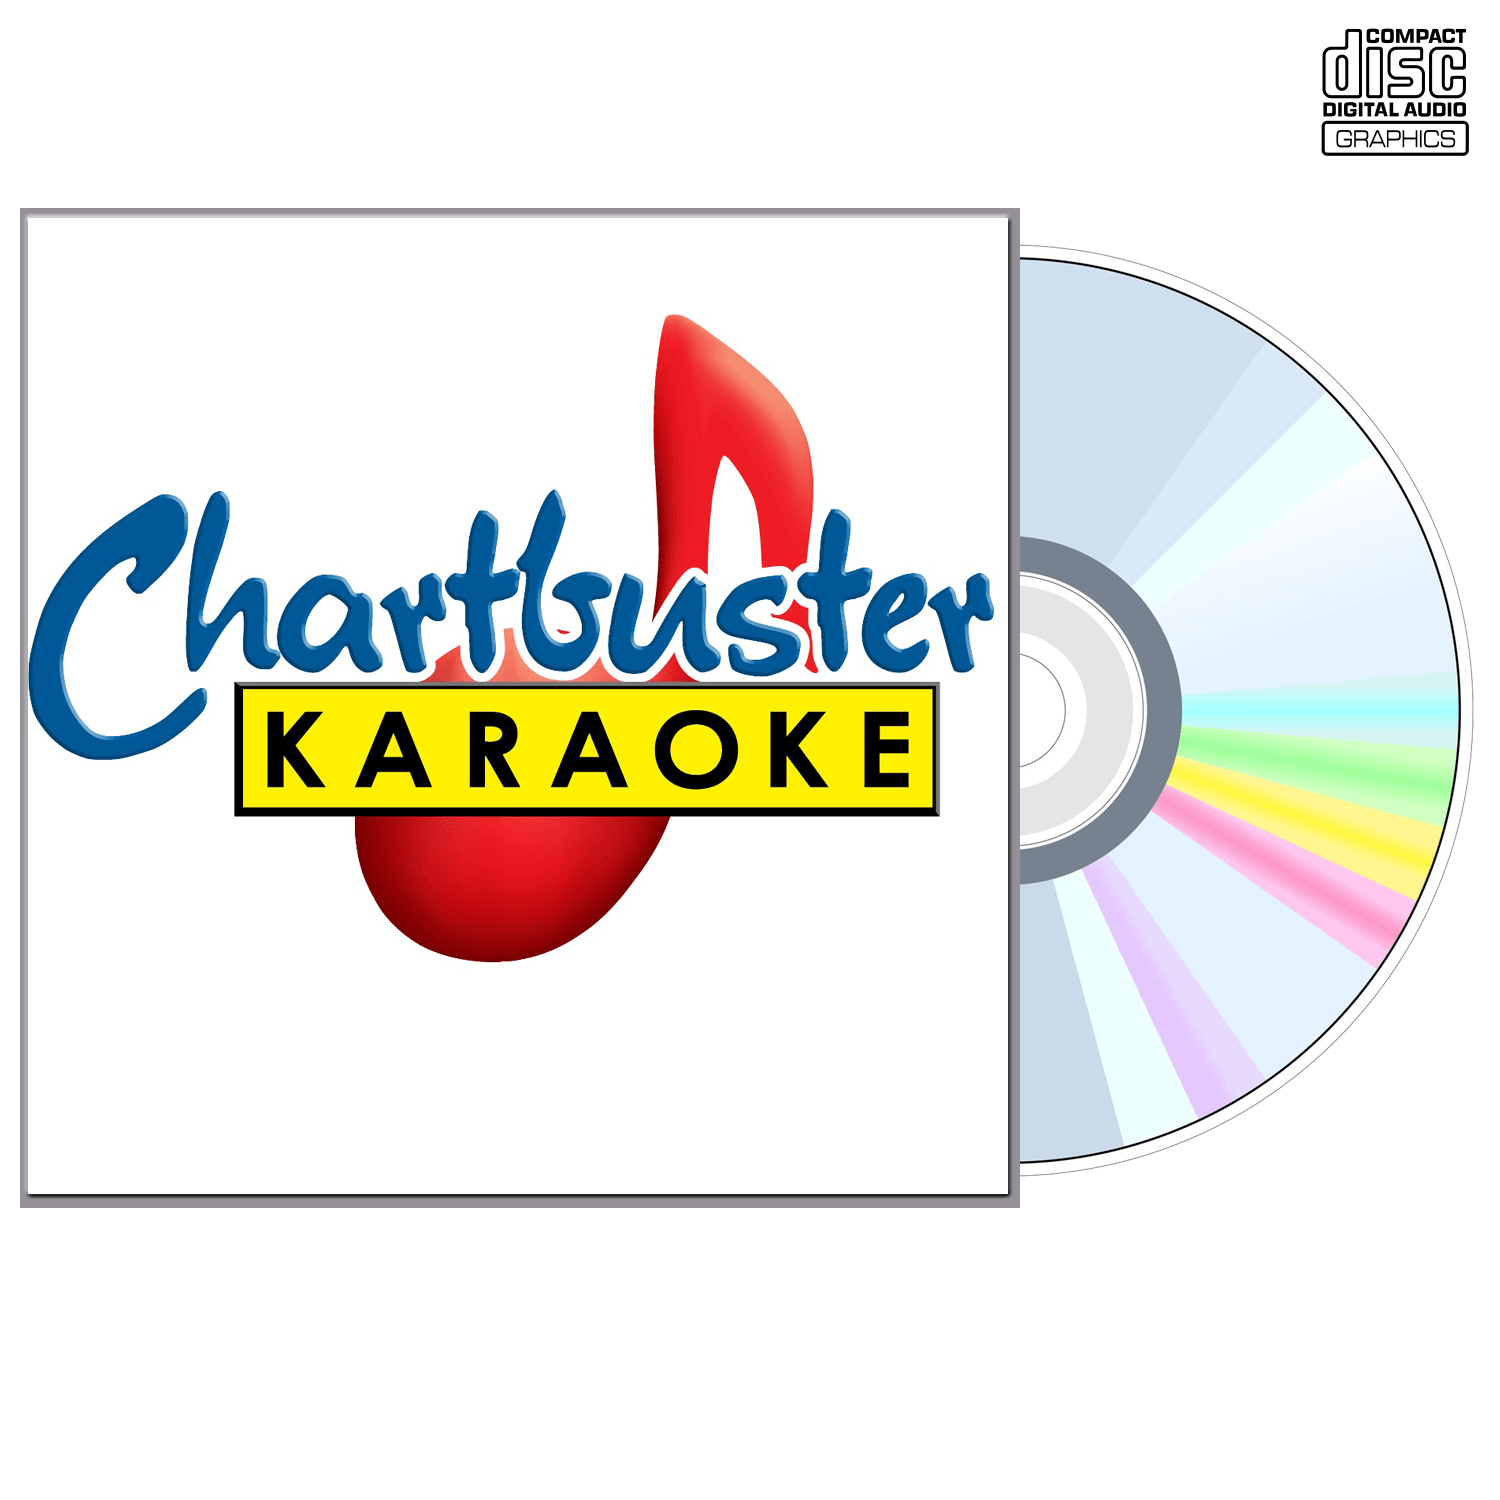 Jeff Foxworthy - CD+G - Chartbuster Karaoke - Karaoke Home Entertainment